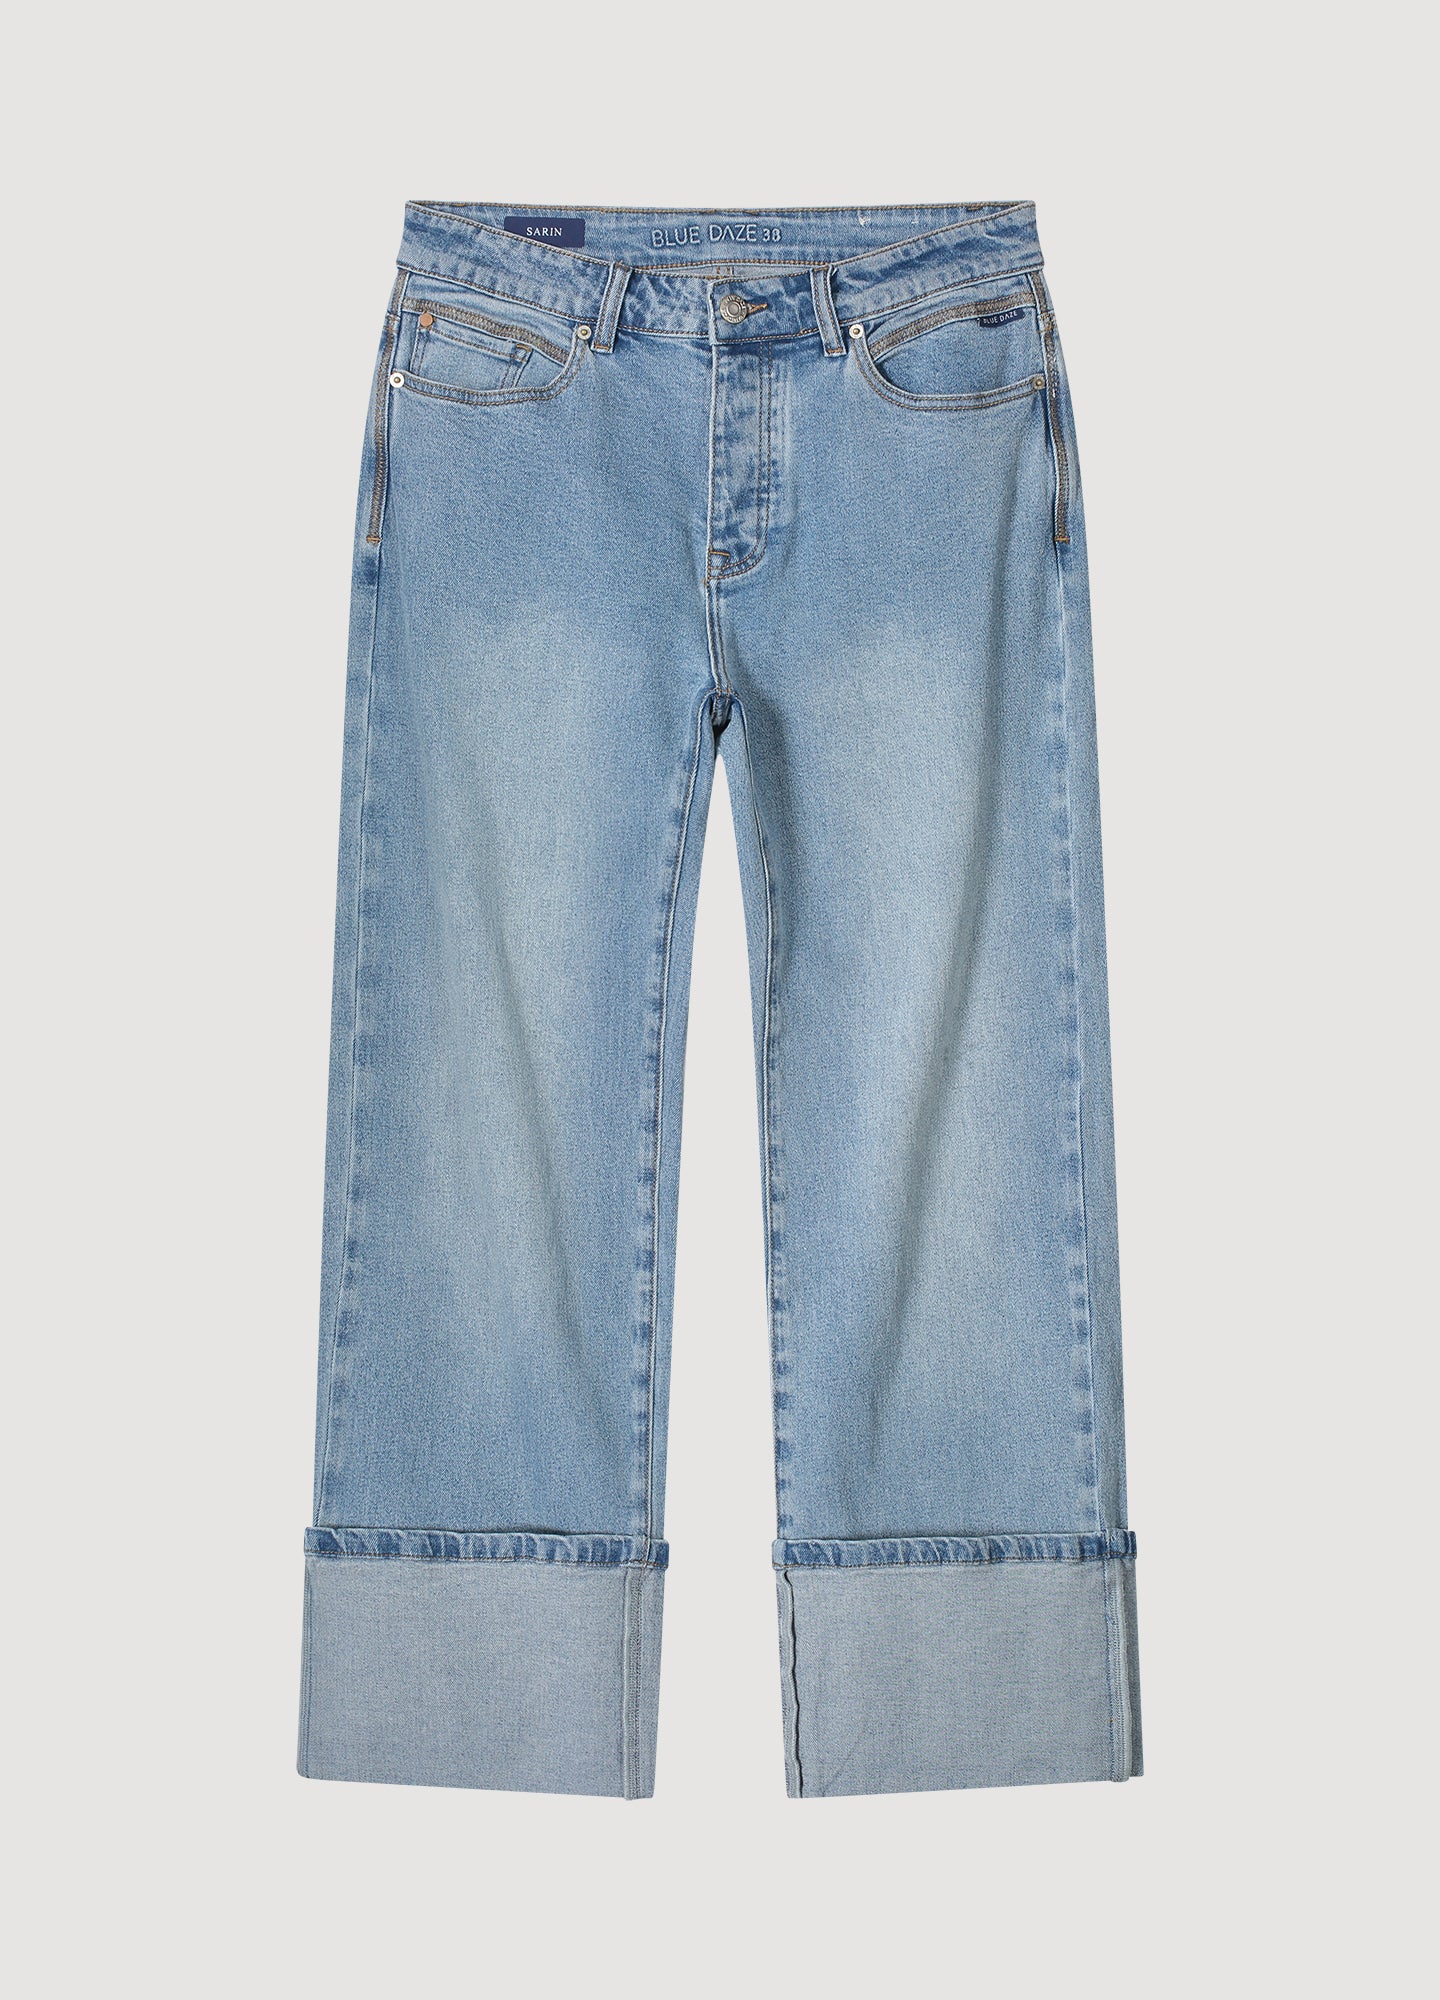 5-pocket SARIN jeans